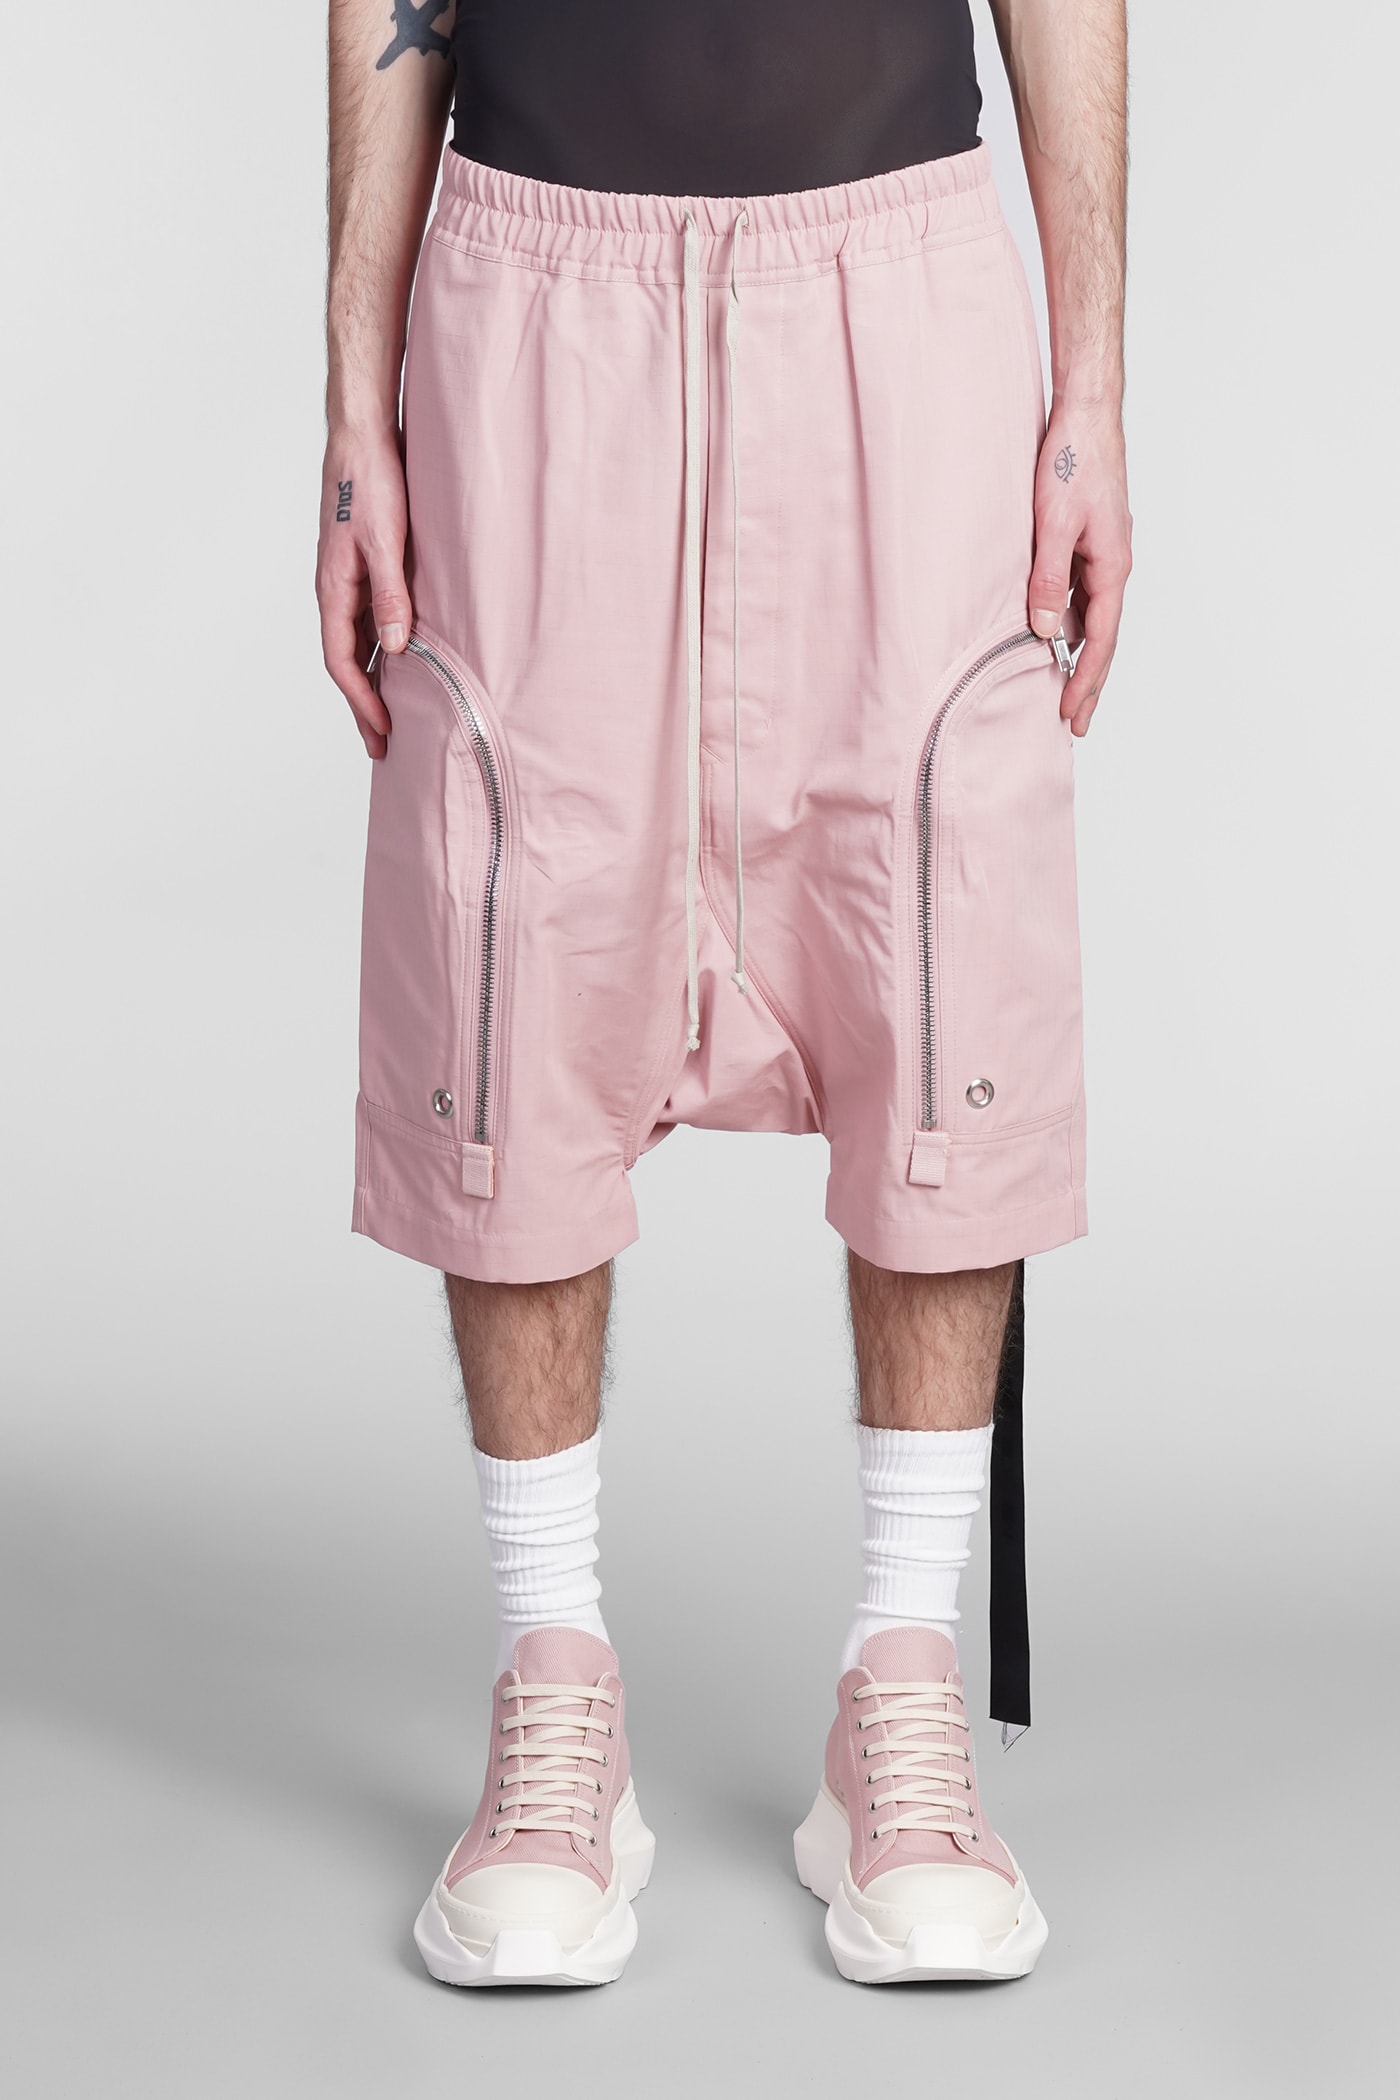 Drkshdw Bauhaus Pods Shorts In Rose-pink Cotton